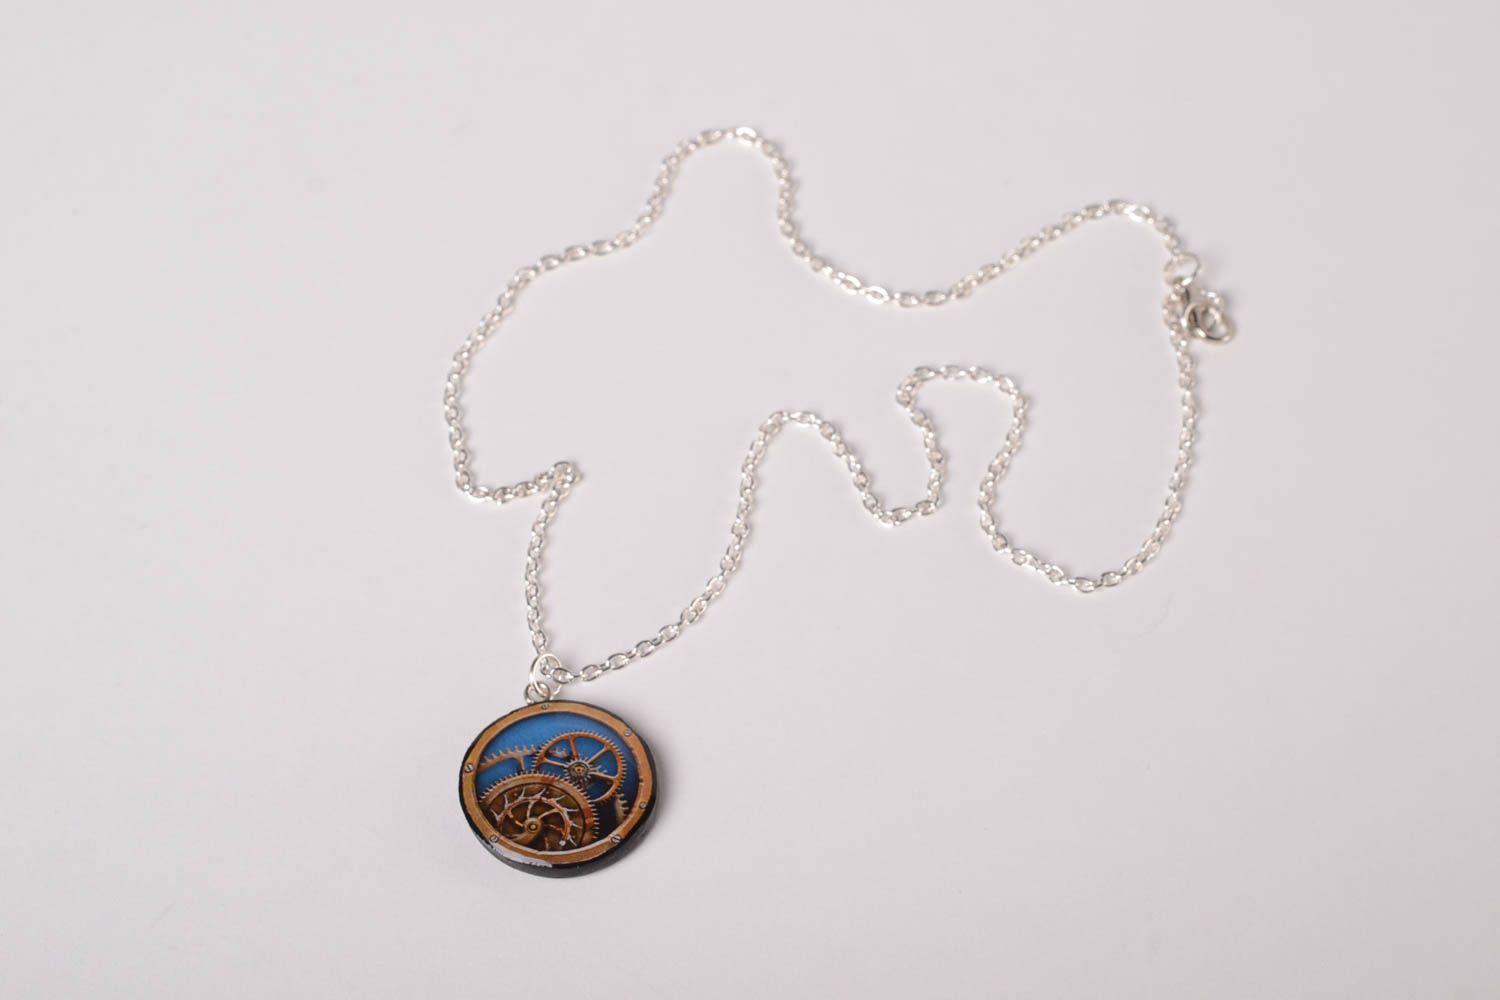 Handmade plastic pendant necklace decoupage ideas artisan jewelry designs photo 3